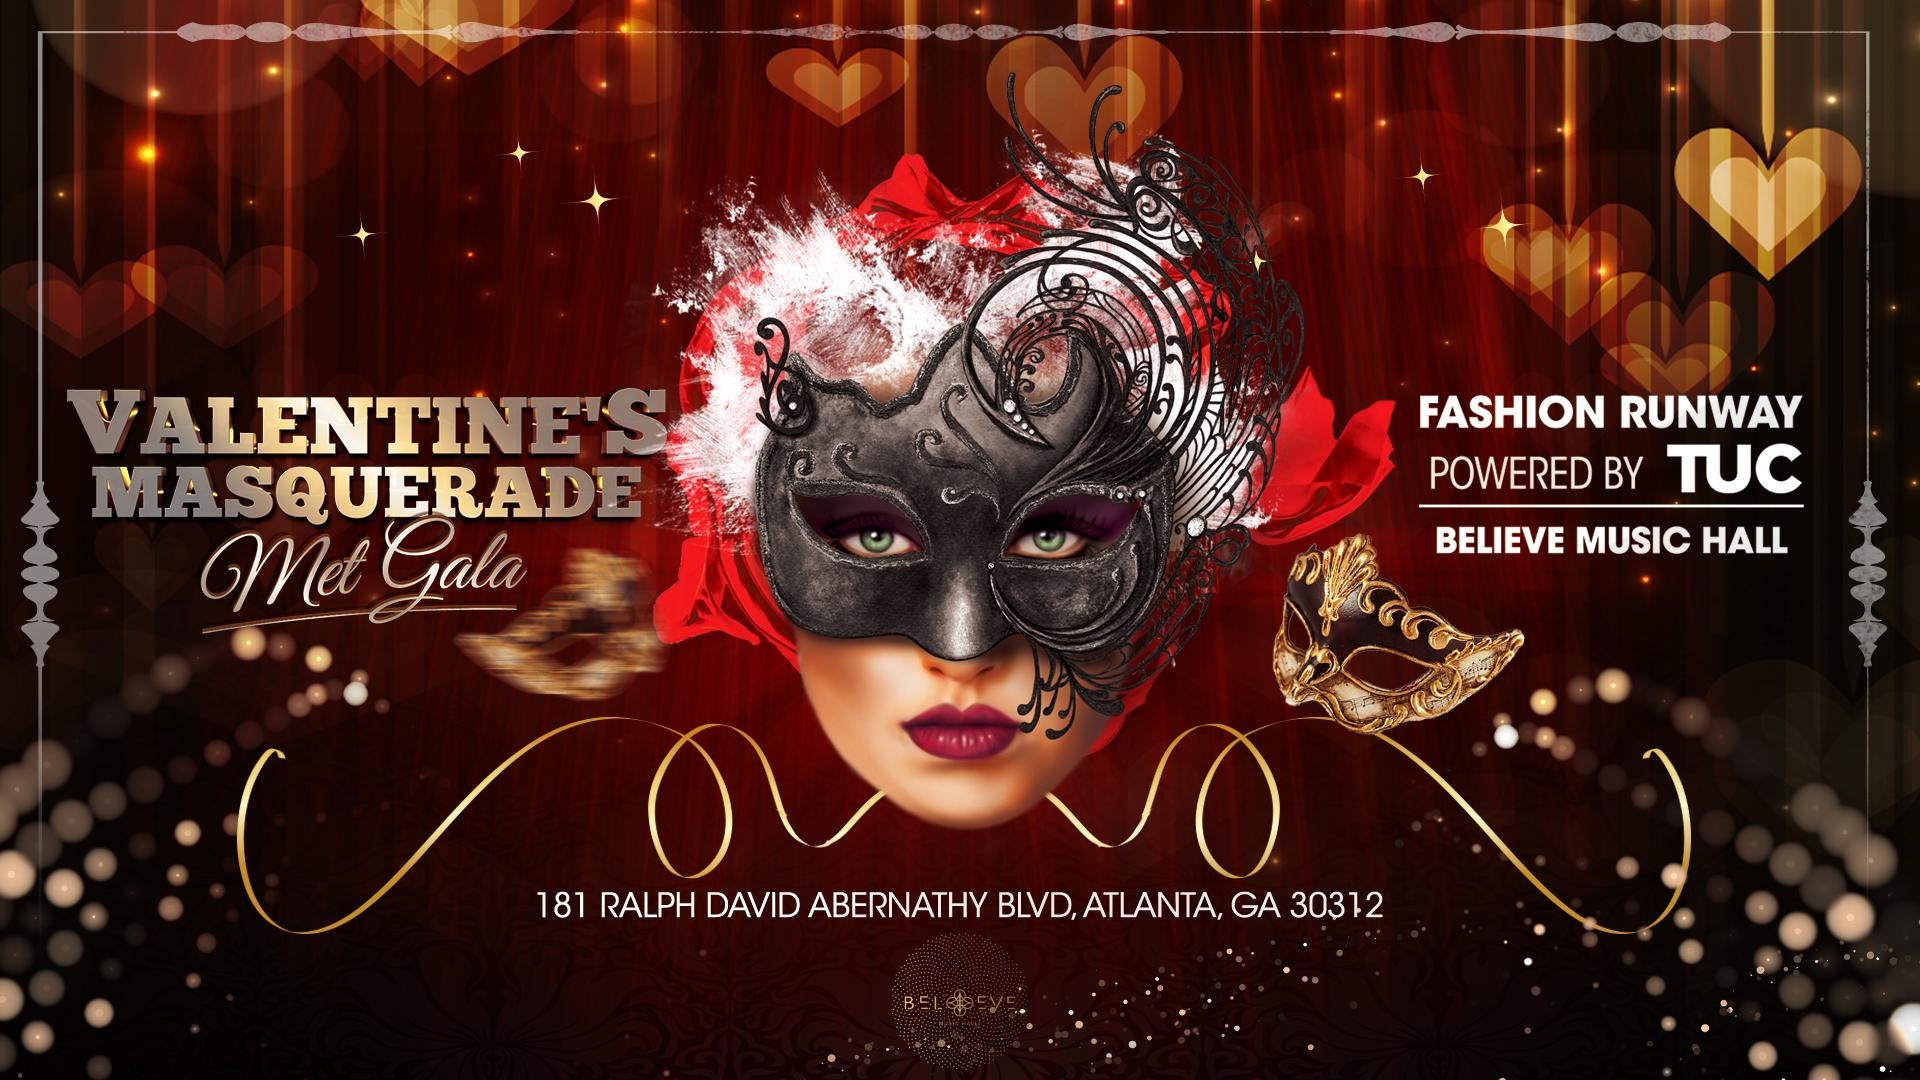 Valentine's Day Masquerade Met Gala SponsorMyEvent